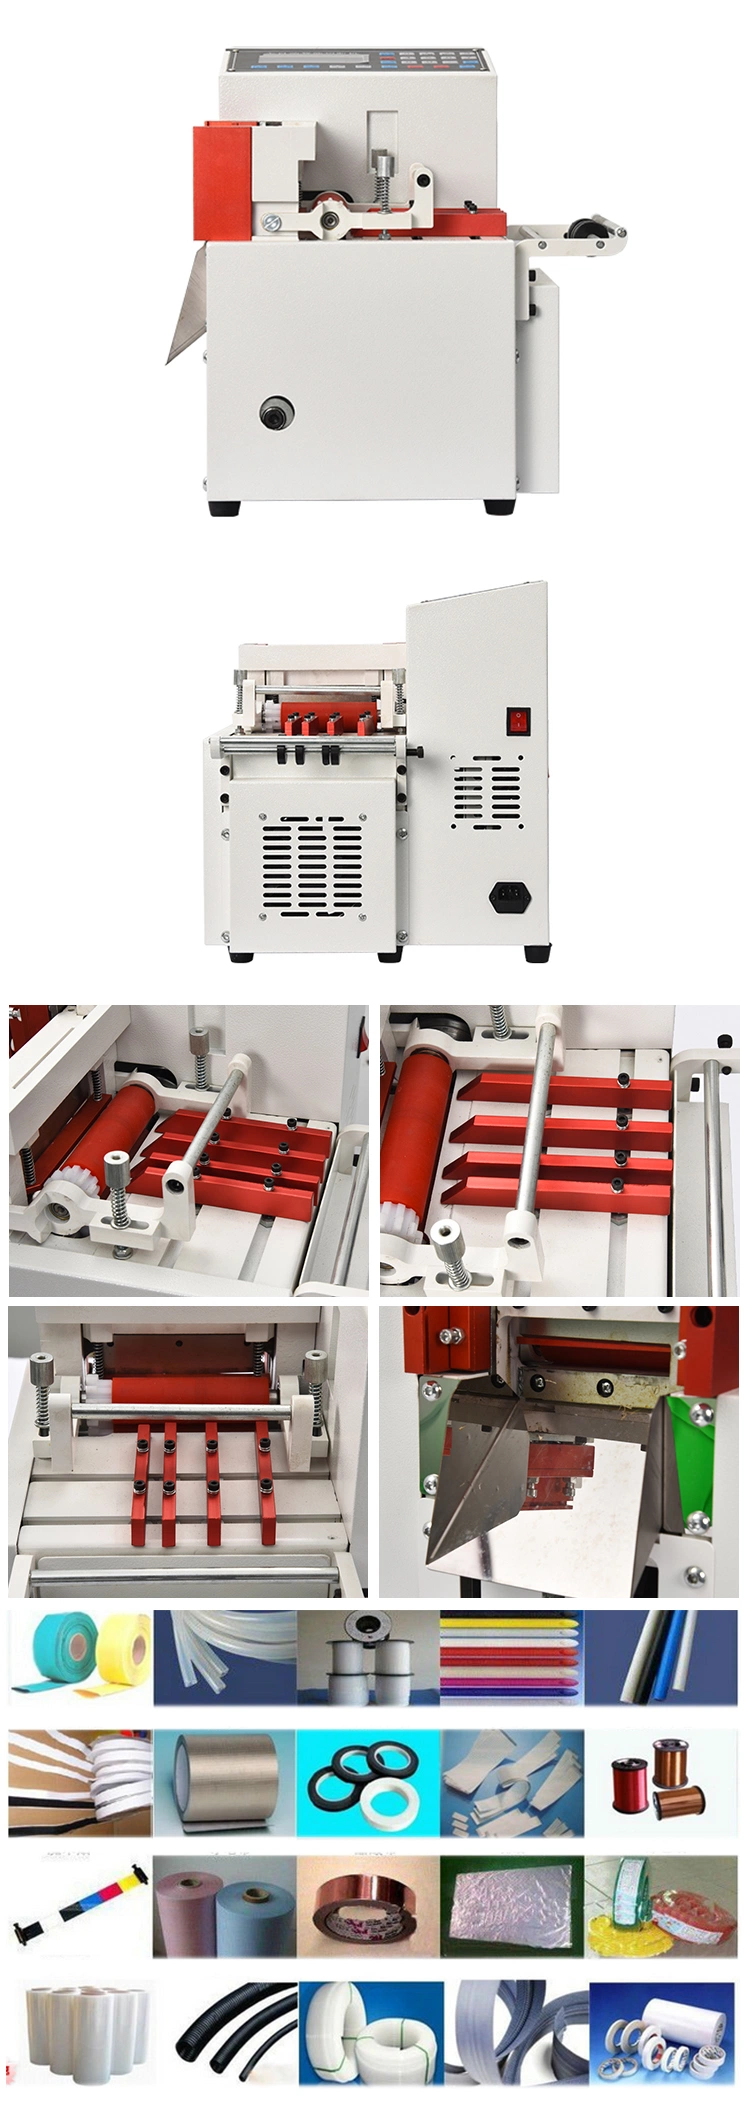 Hc-100 Full Digital Intelligent Heating Shrink Tube Cutting Machine Manufacturer